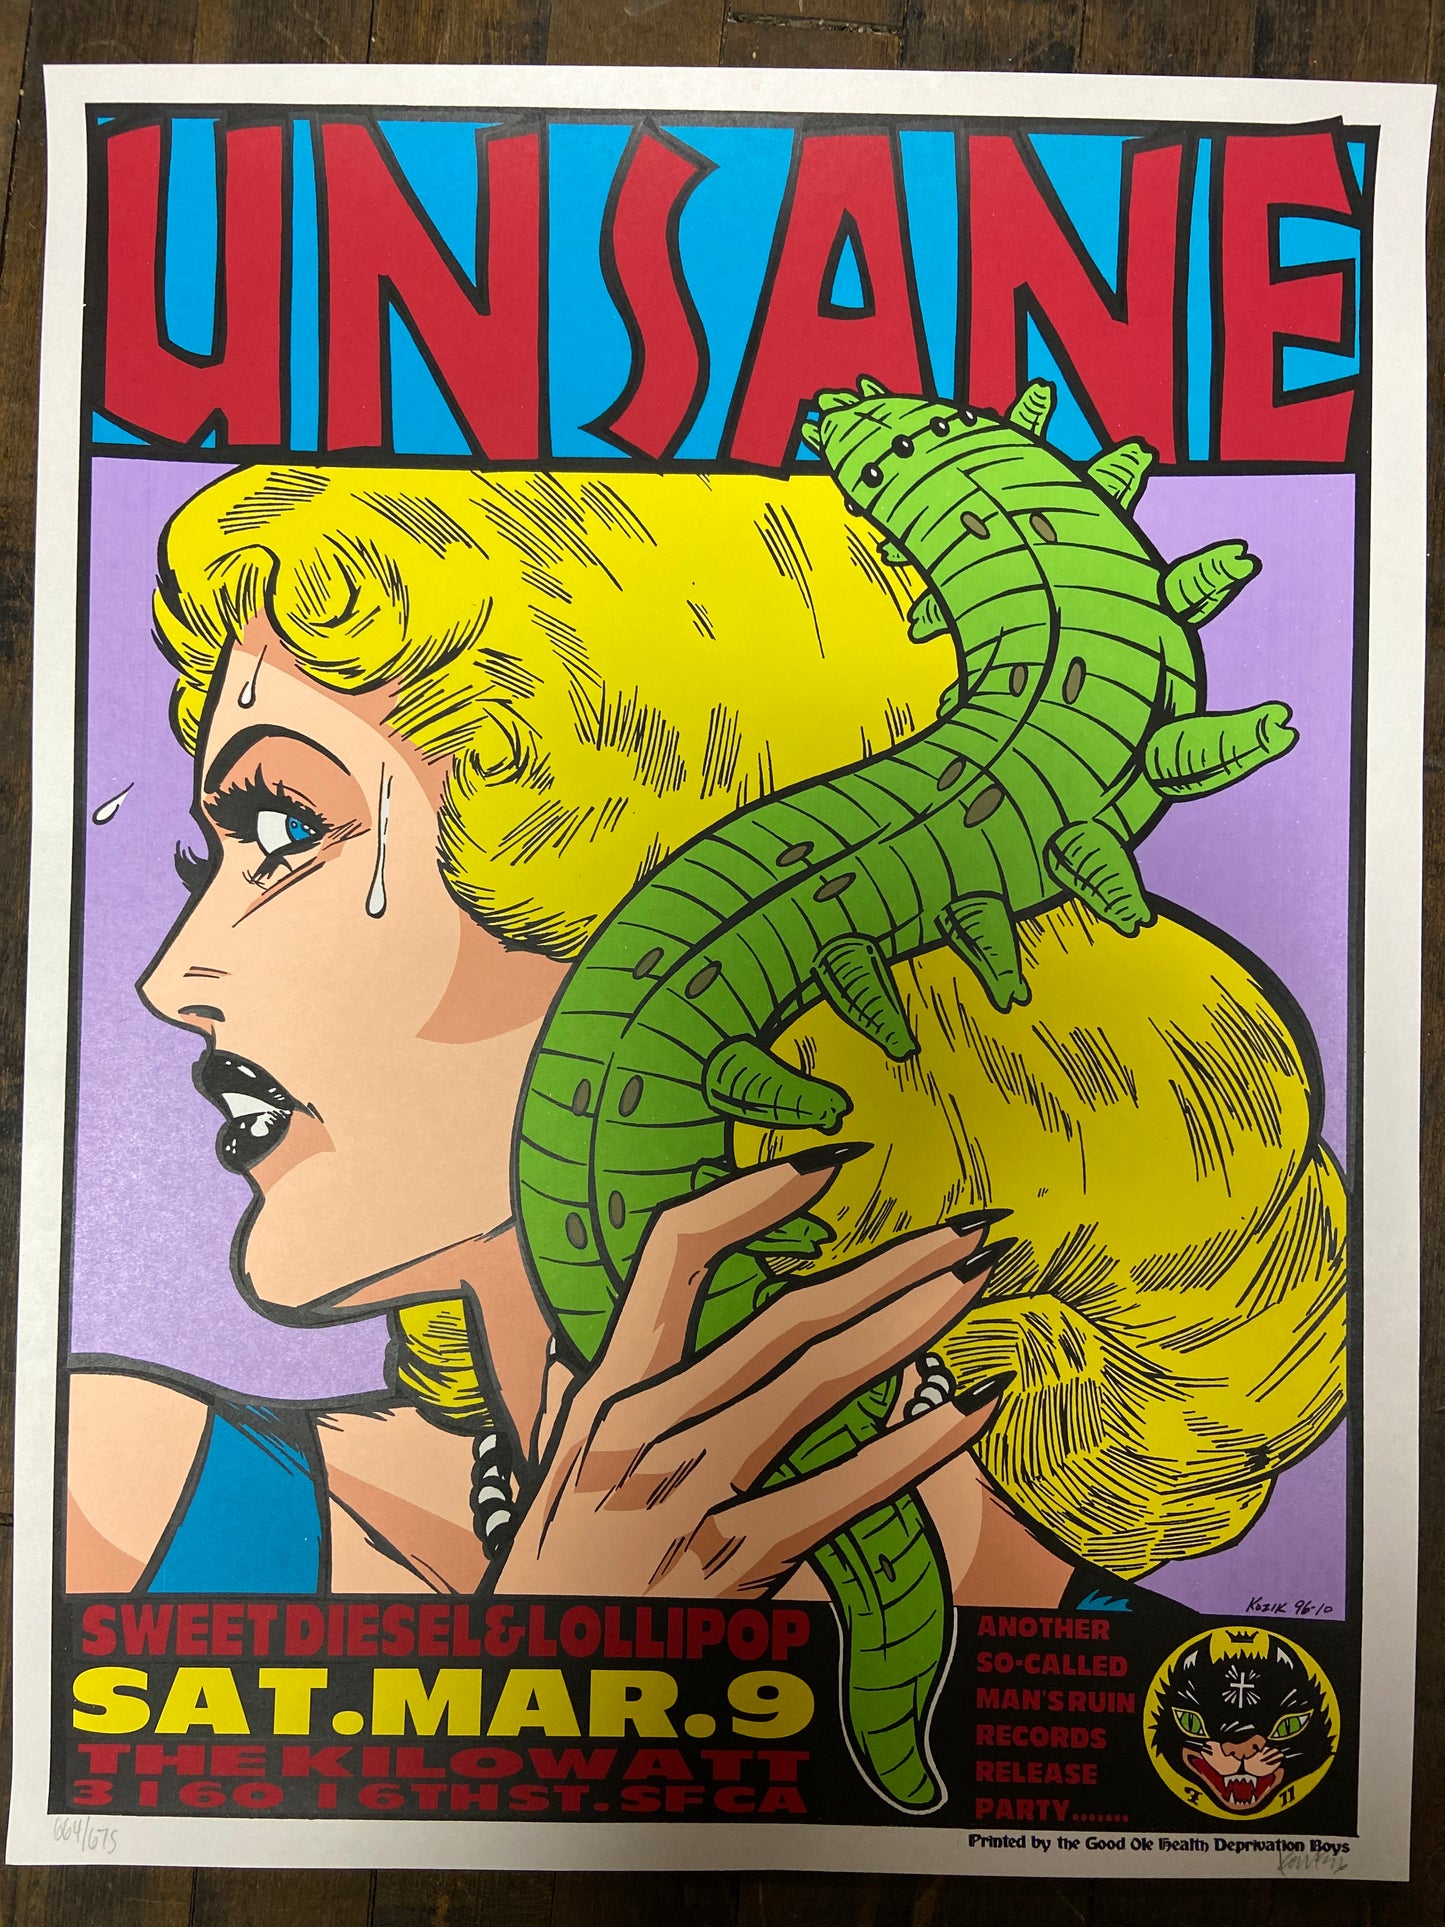 Frank Kozik - 1996 - Unsane Concert Poster